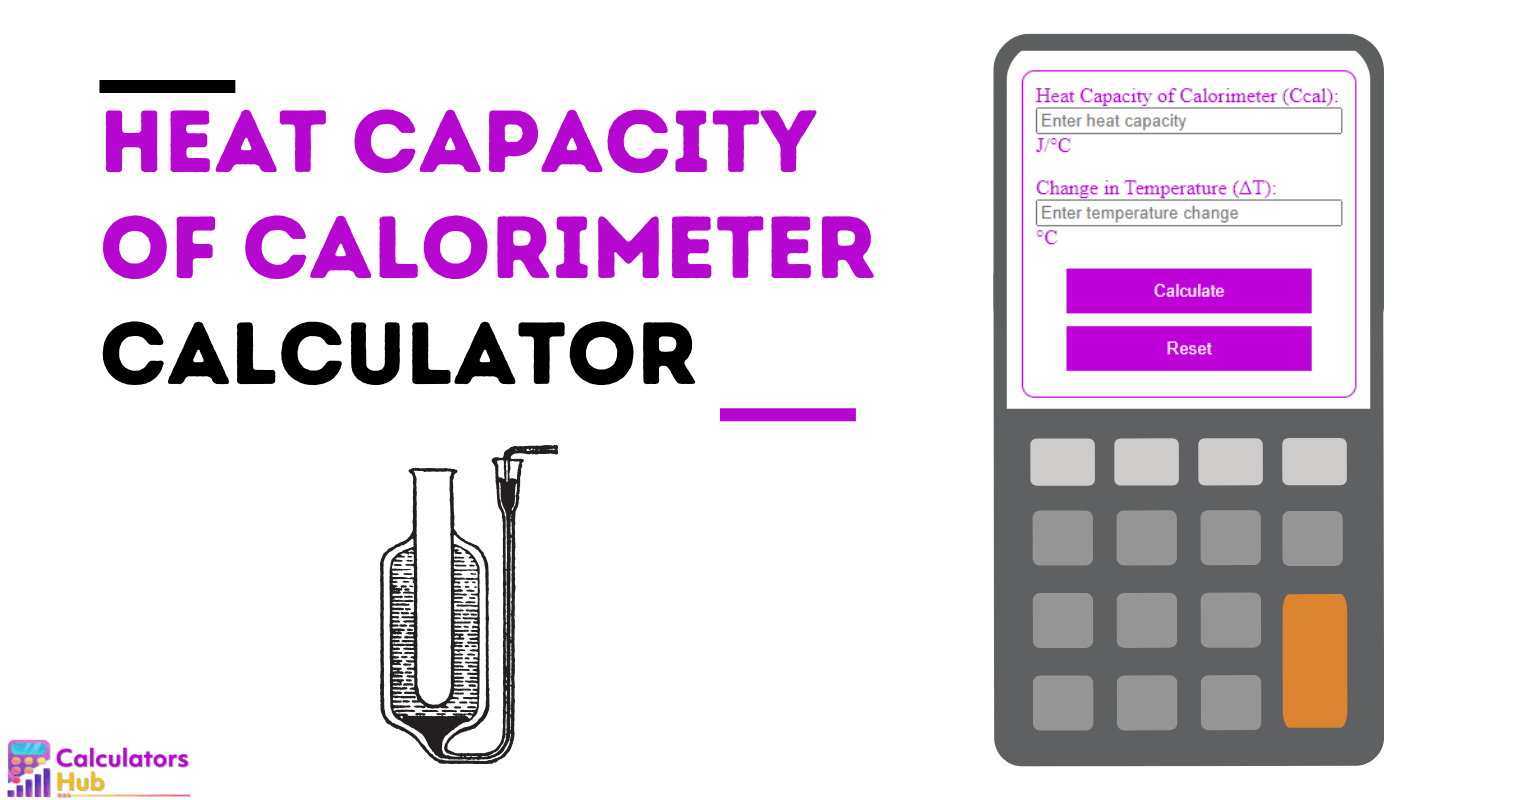 Heat Capacity of Calorimeter Calculator